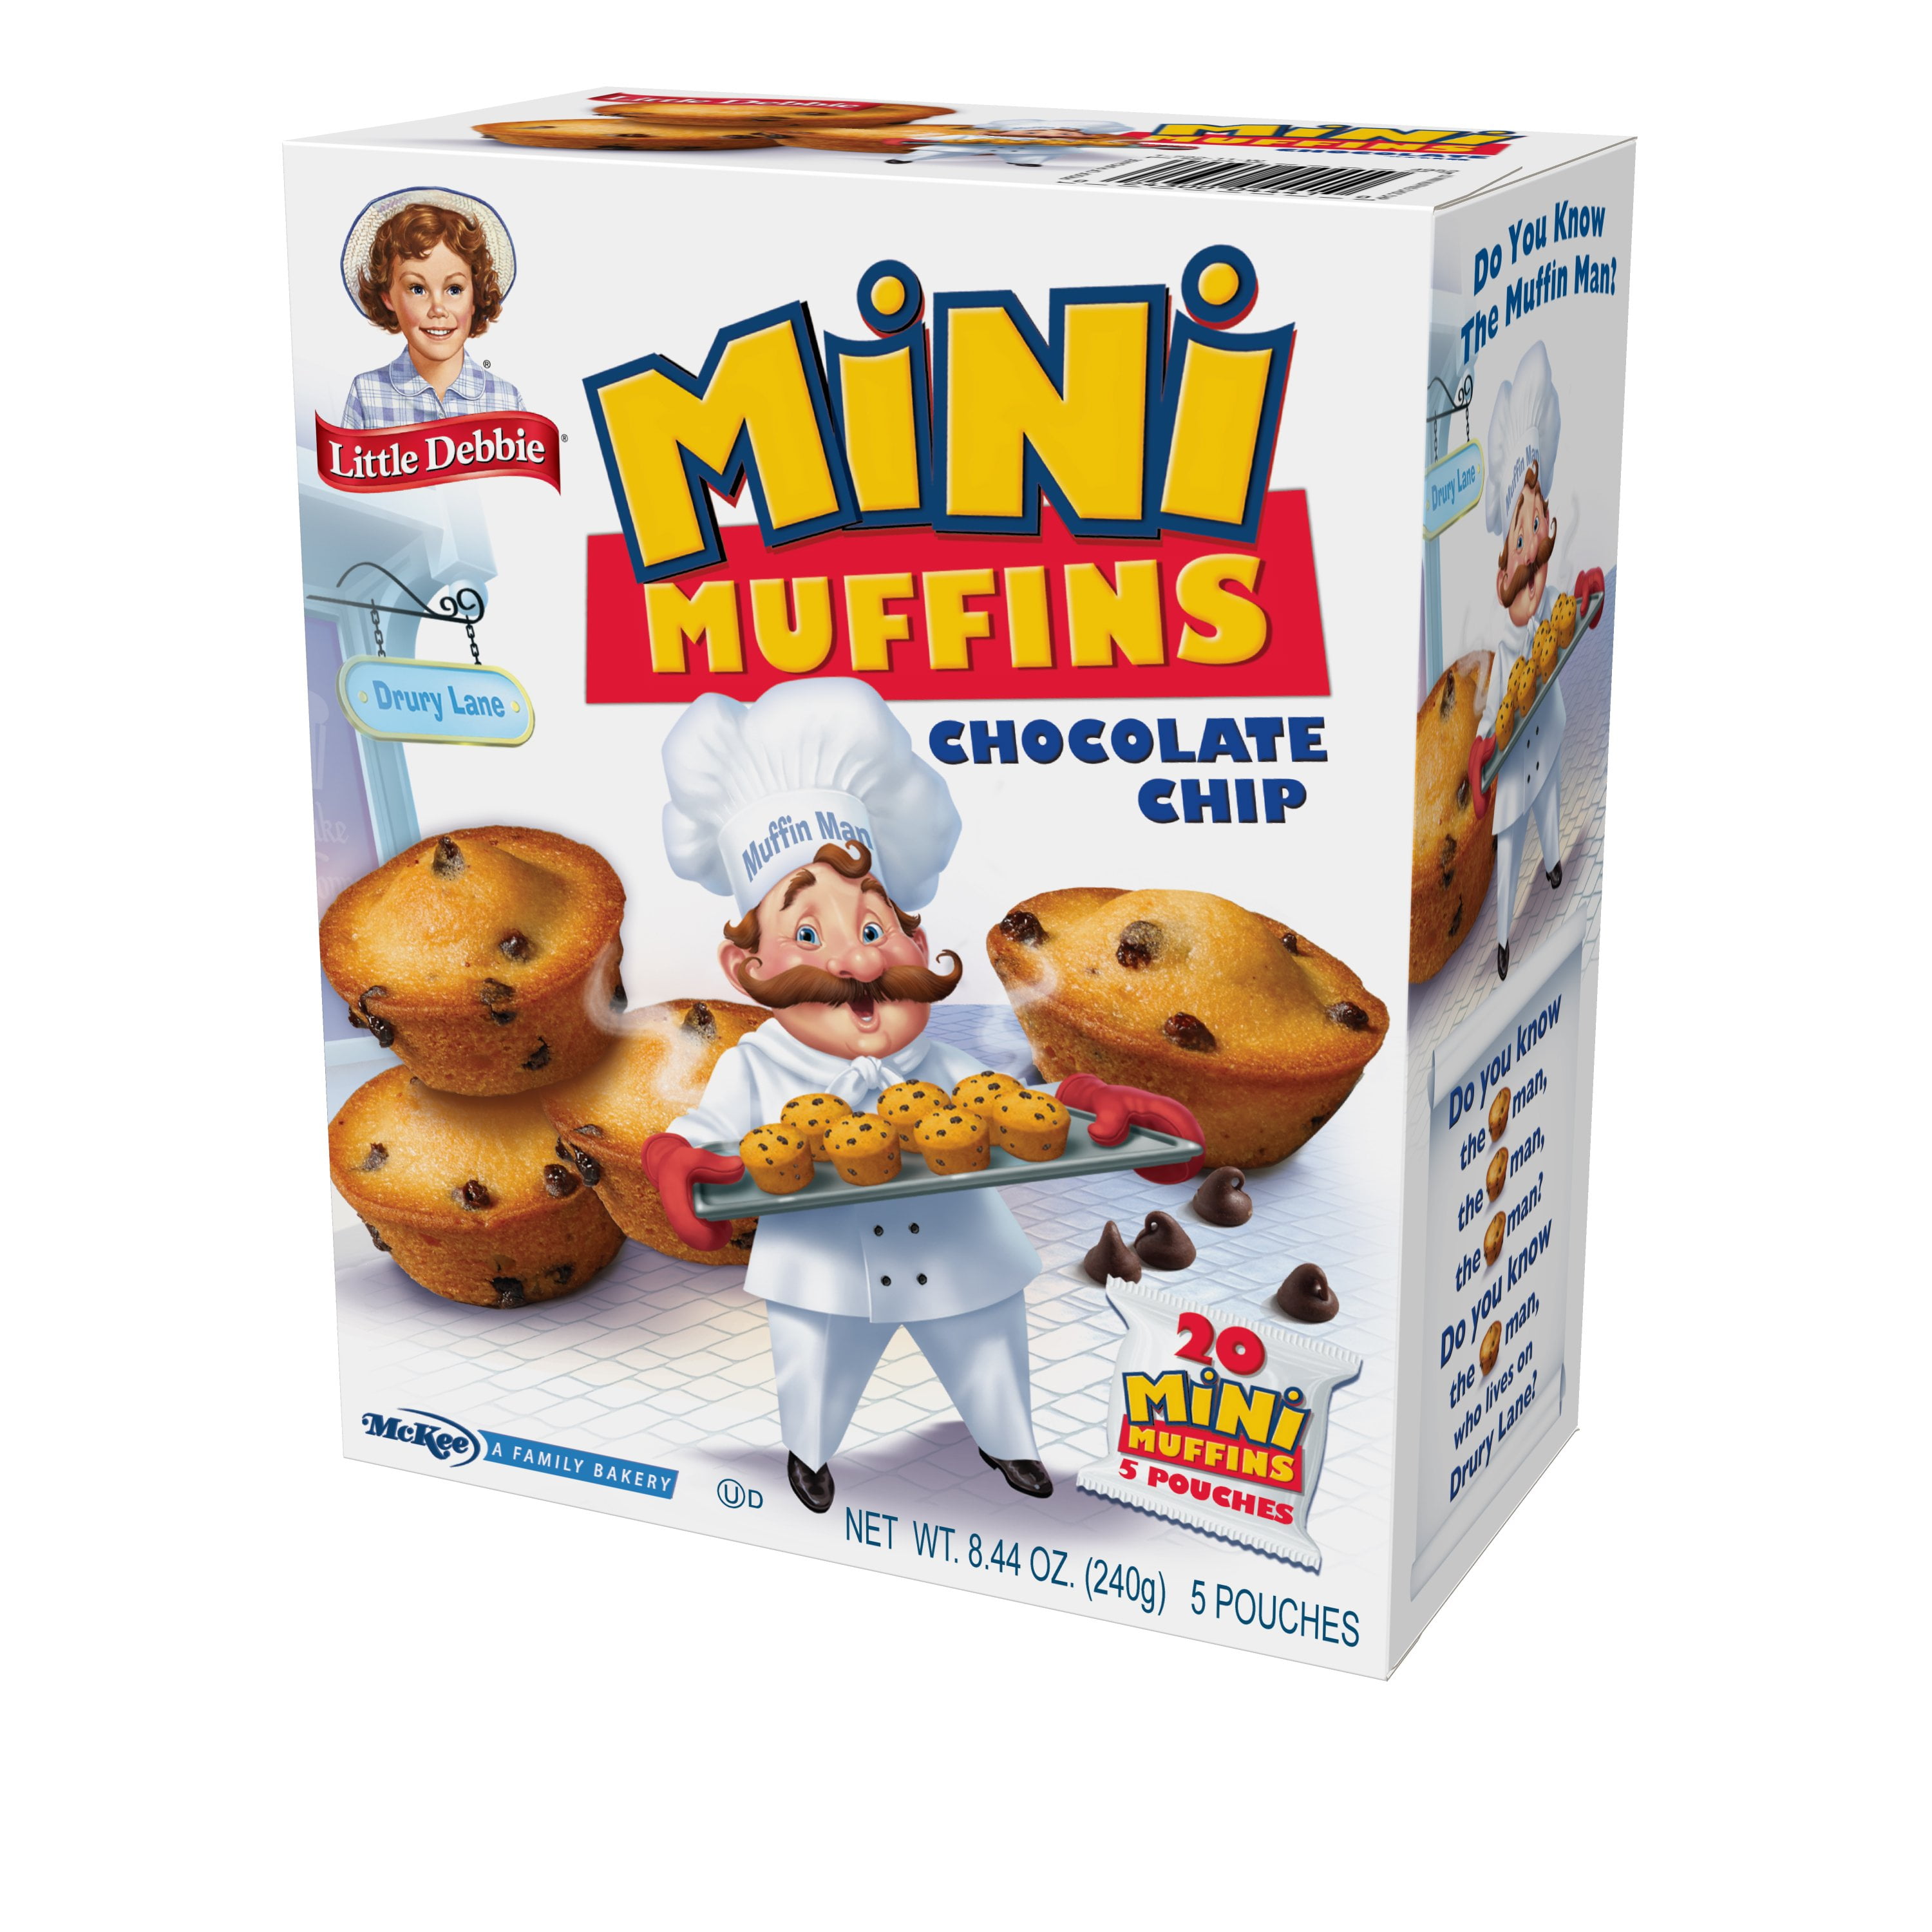 Chocolate Chip Mini Muffins - My Kids Lick The Bowl